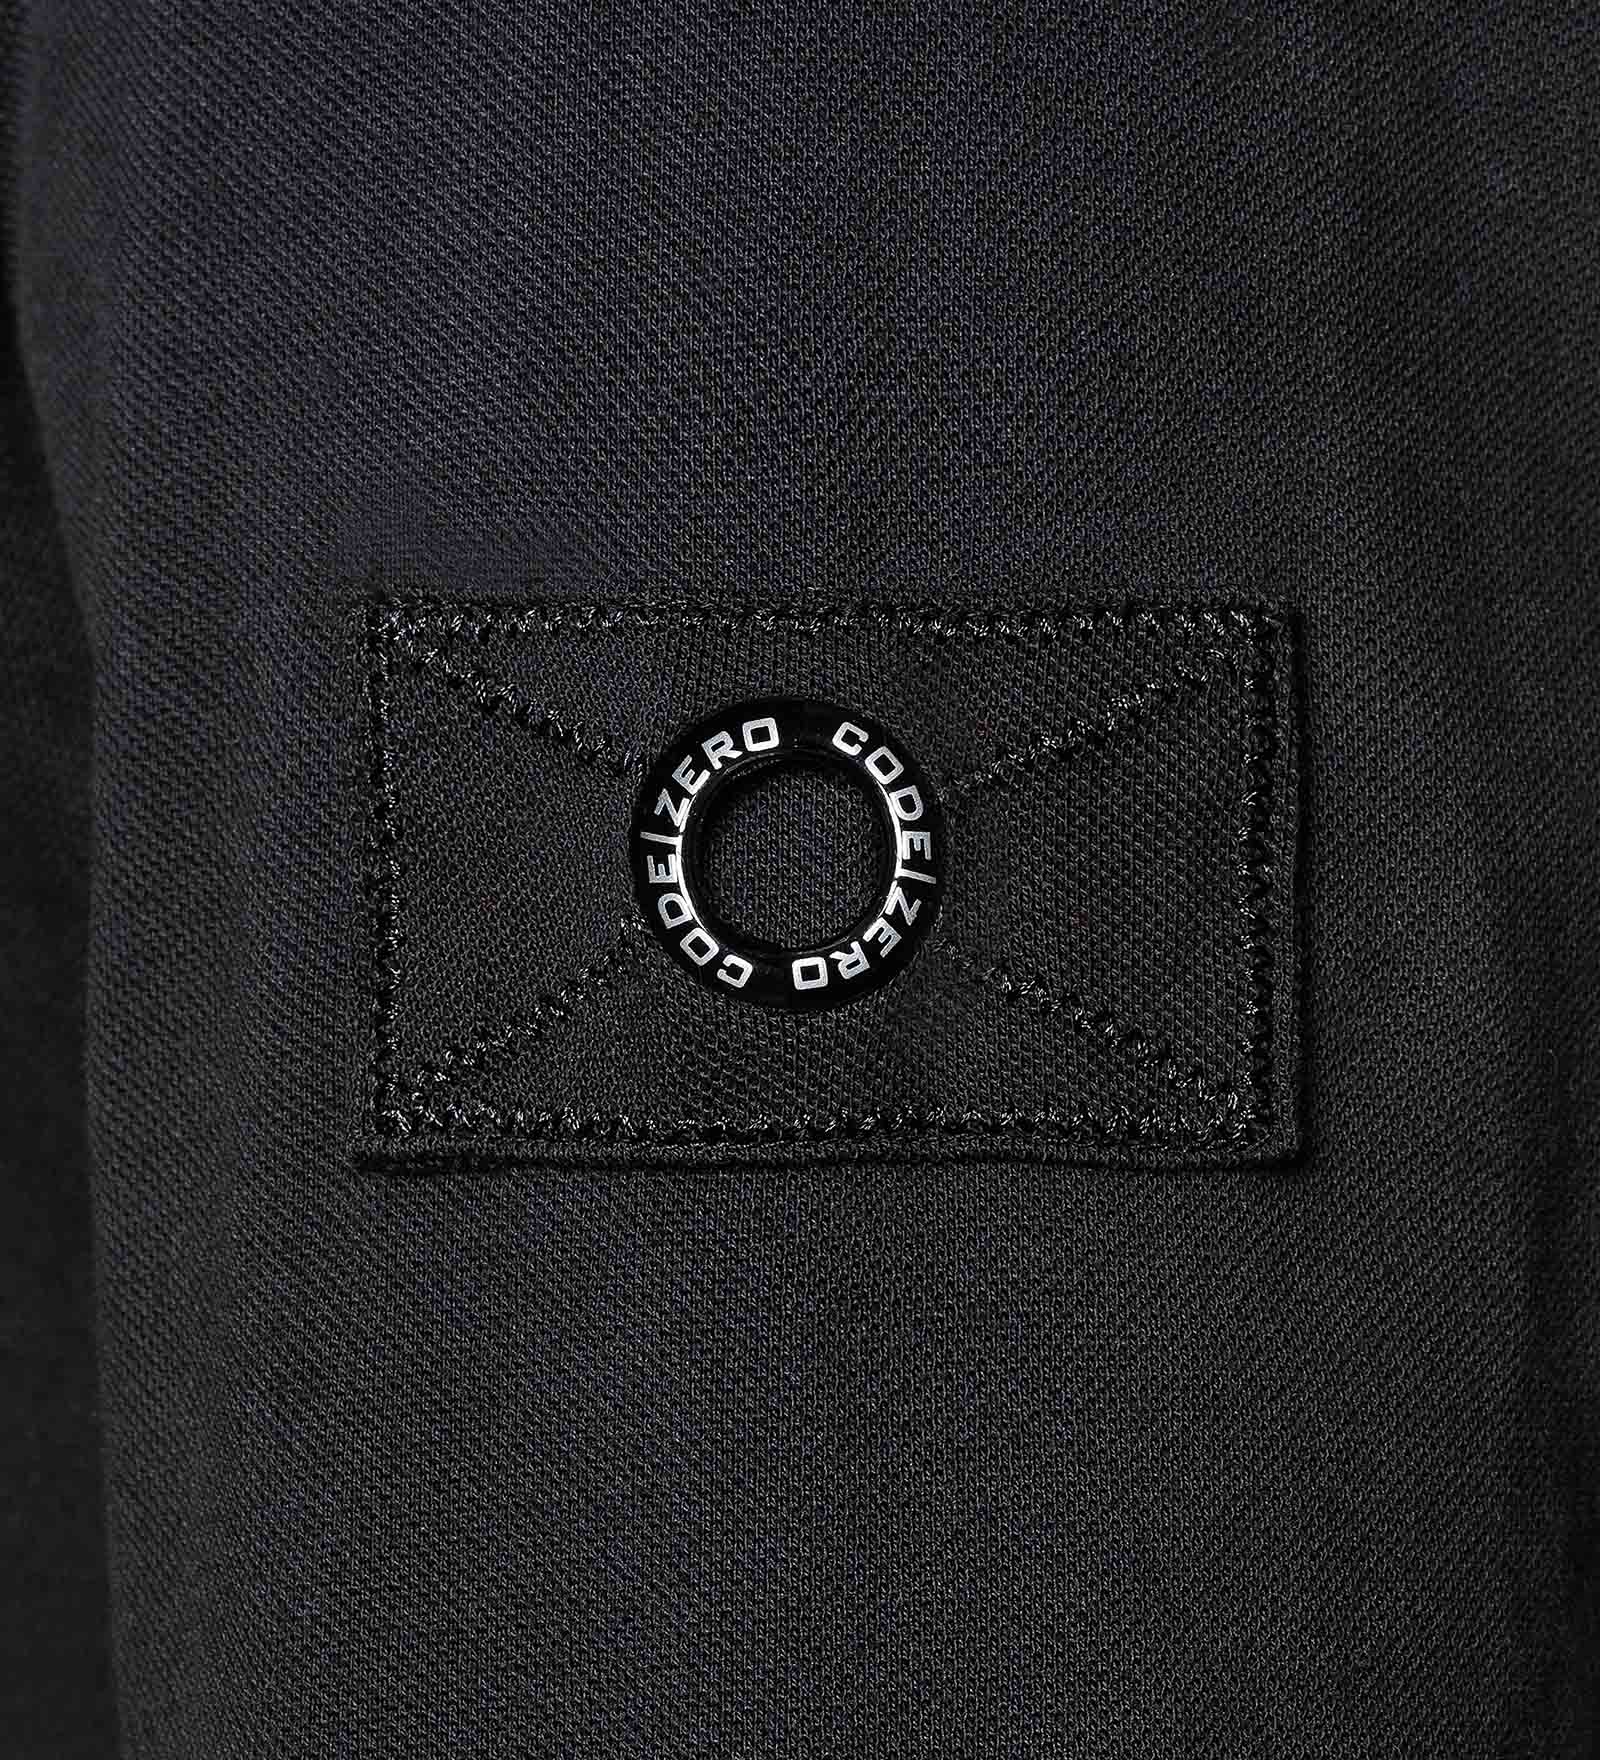 Detail of a black polo shirt